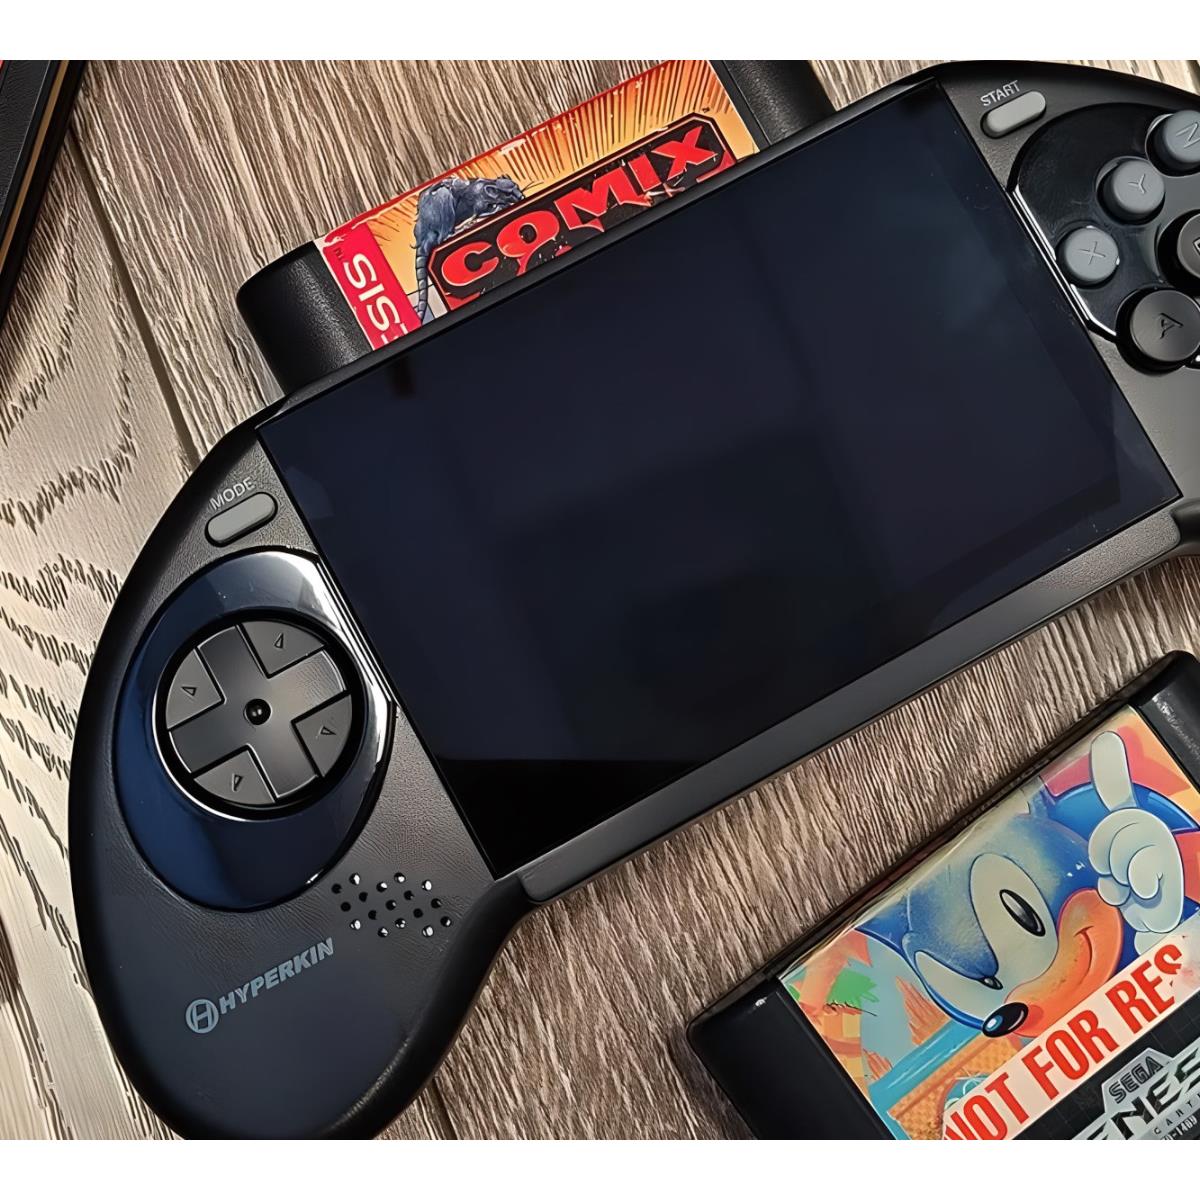 Mega 95, la consola portátil de Hyperkin para juegos de Sega